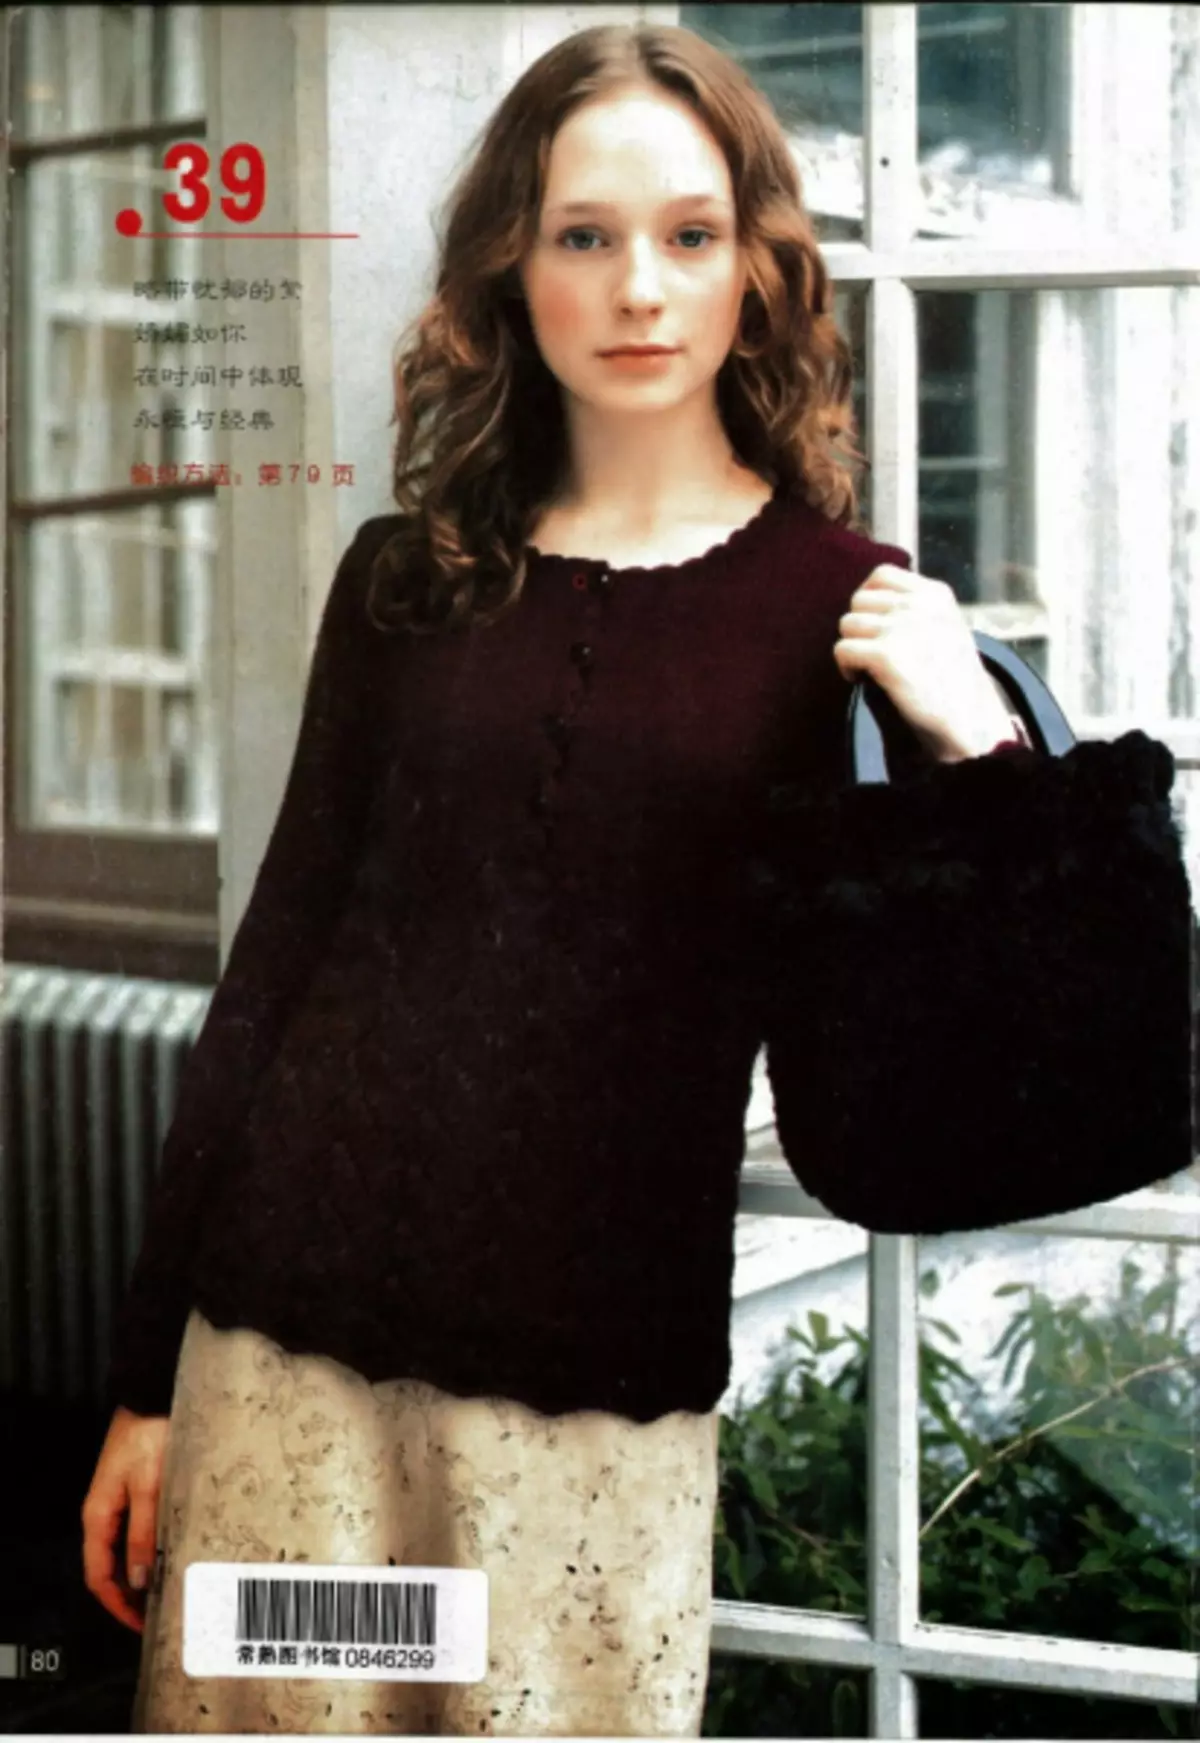 Modelos femininos con agullas de tricotar. Revista con esquemas